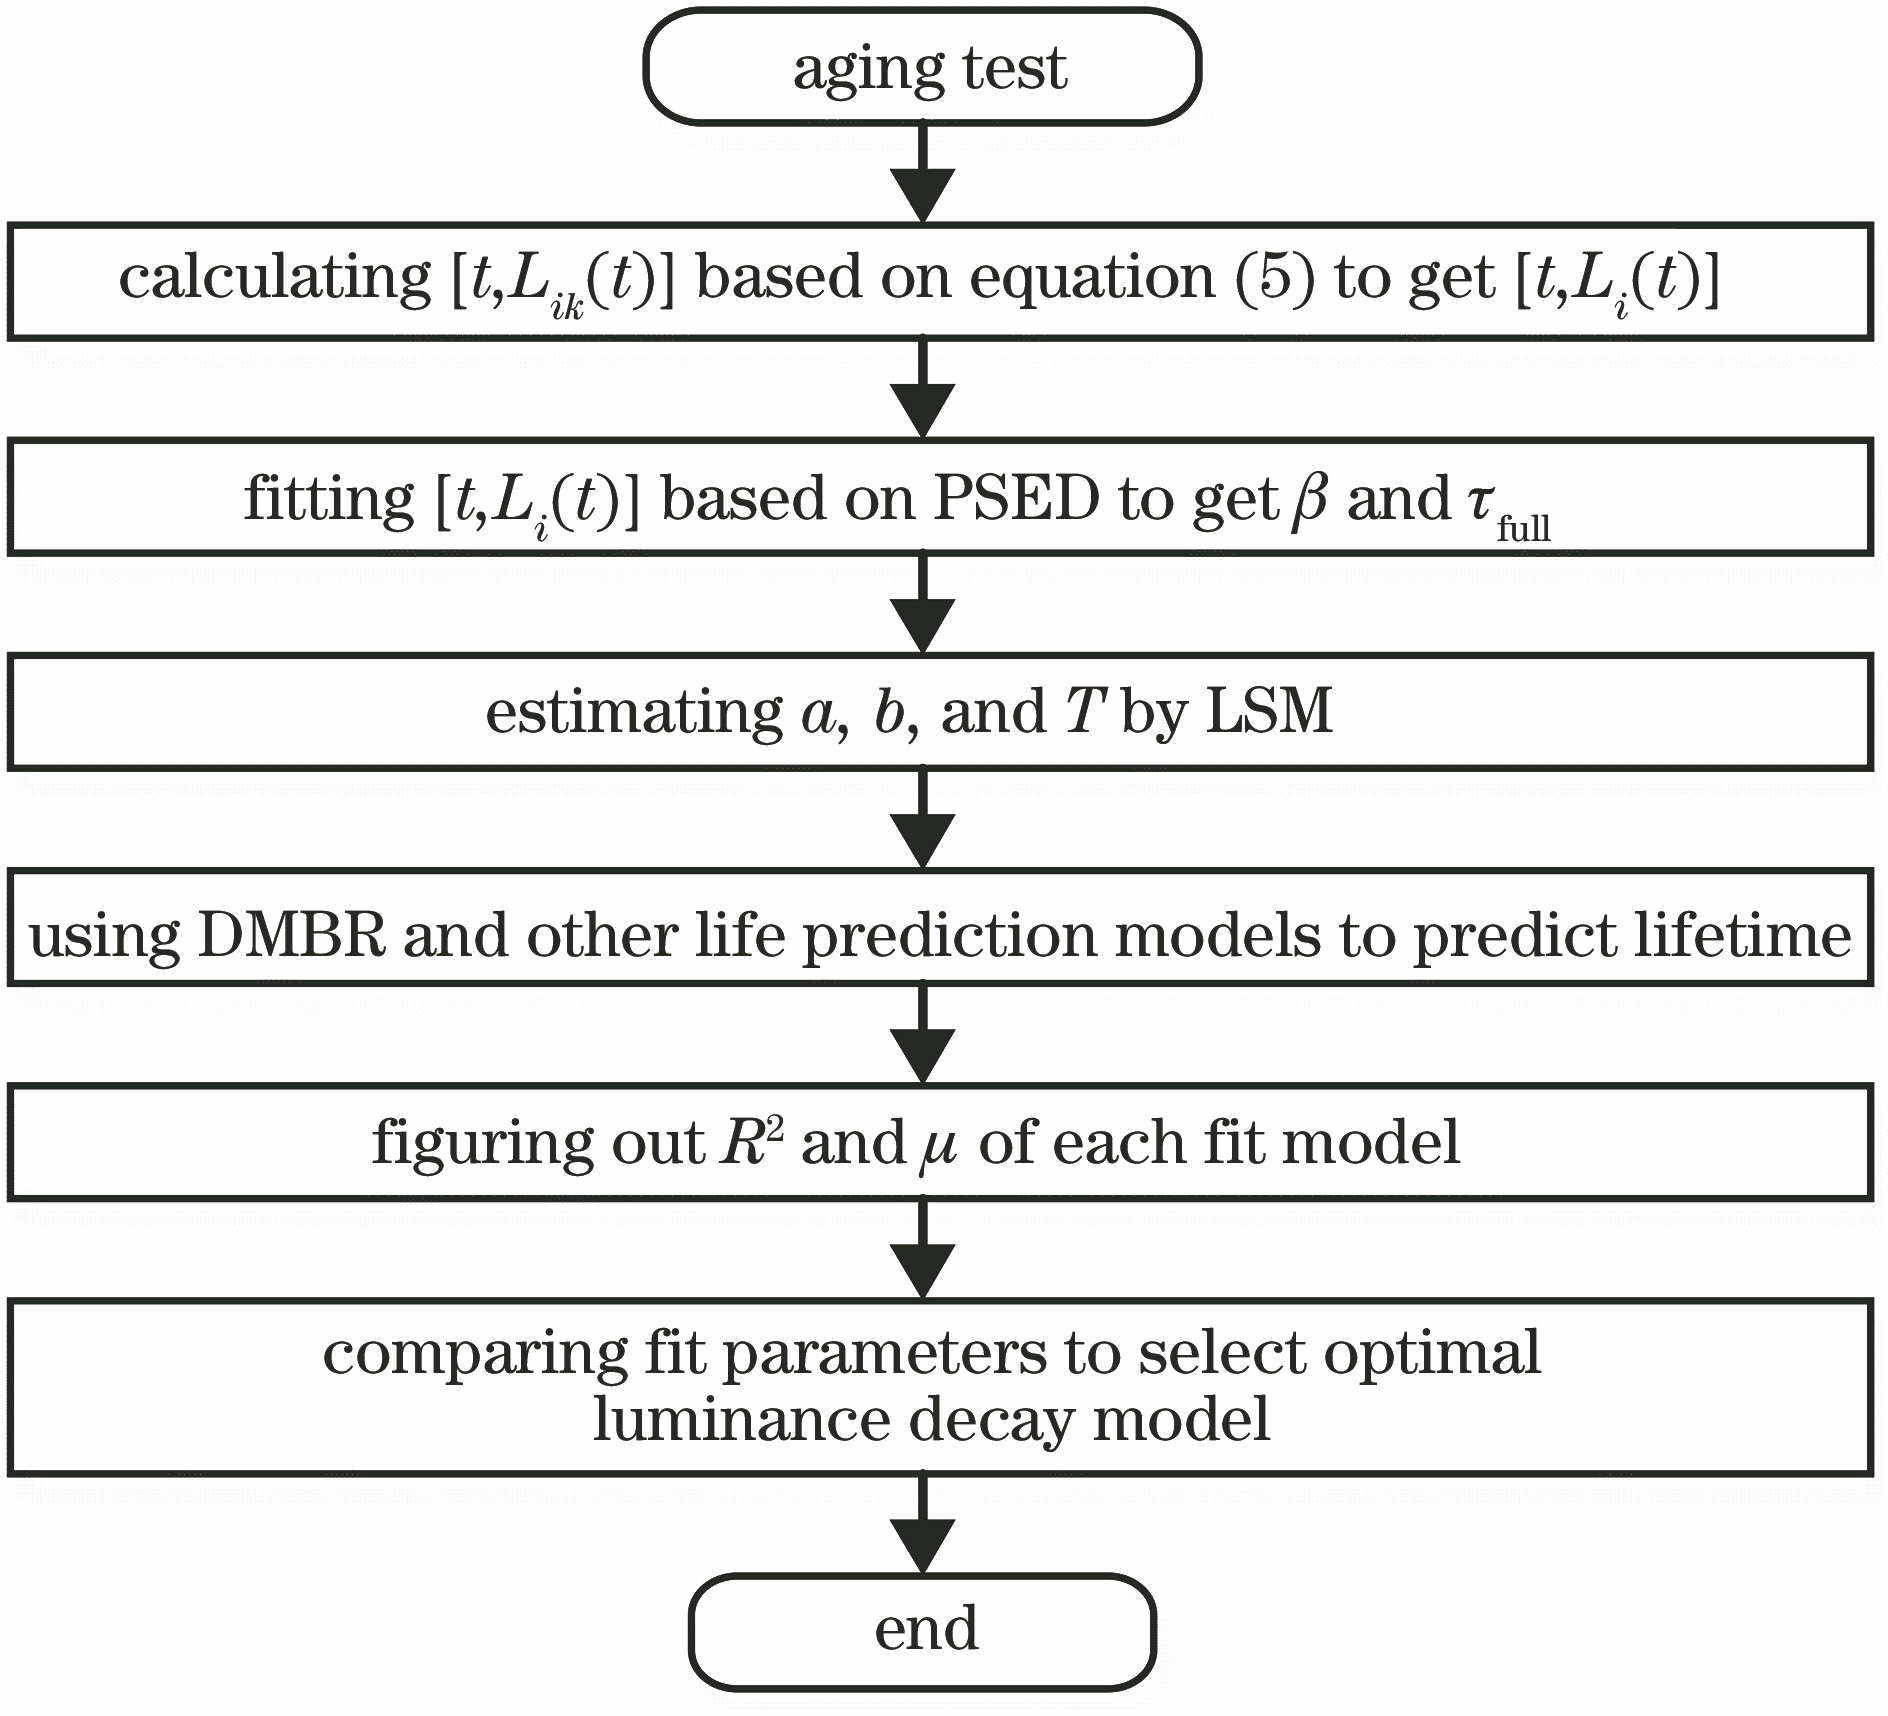 Establishment and verification process of luminance decay model